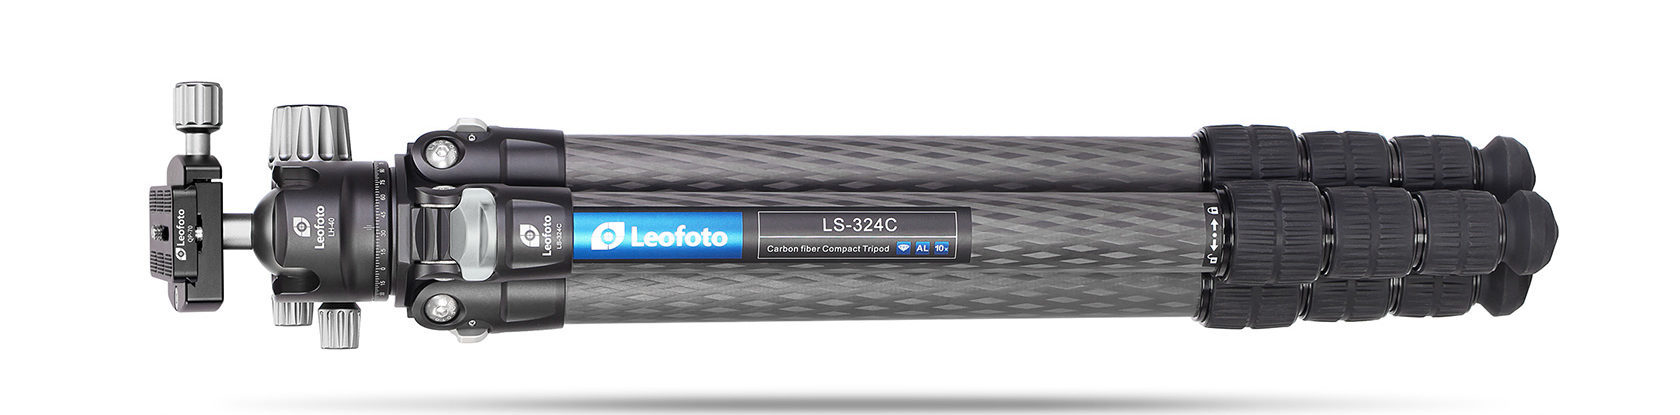 Leofoto LS-324C LH-40